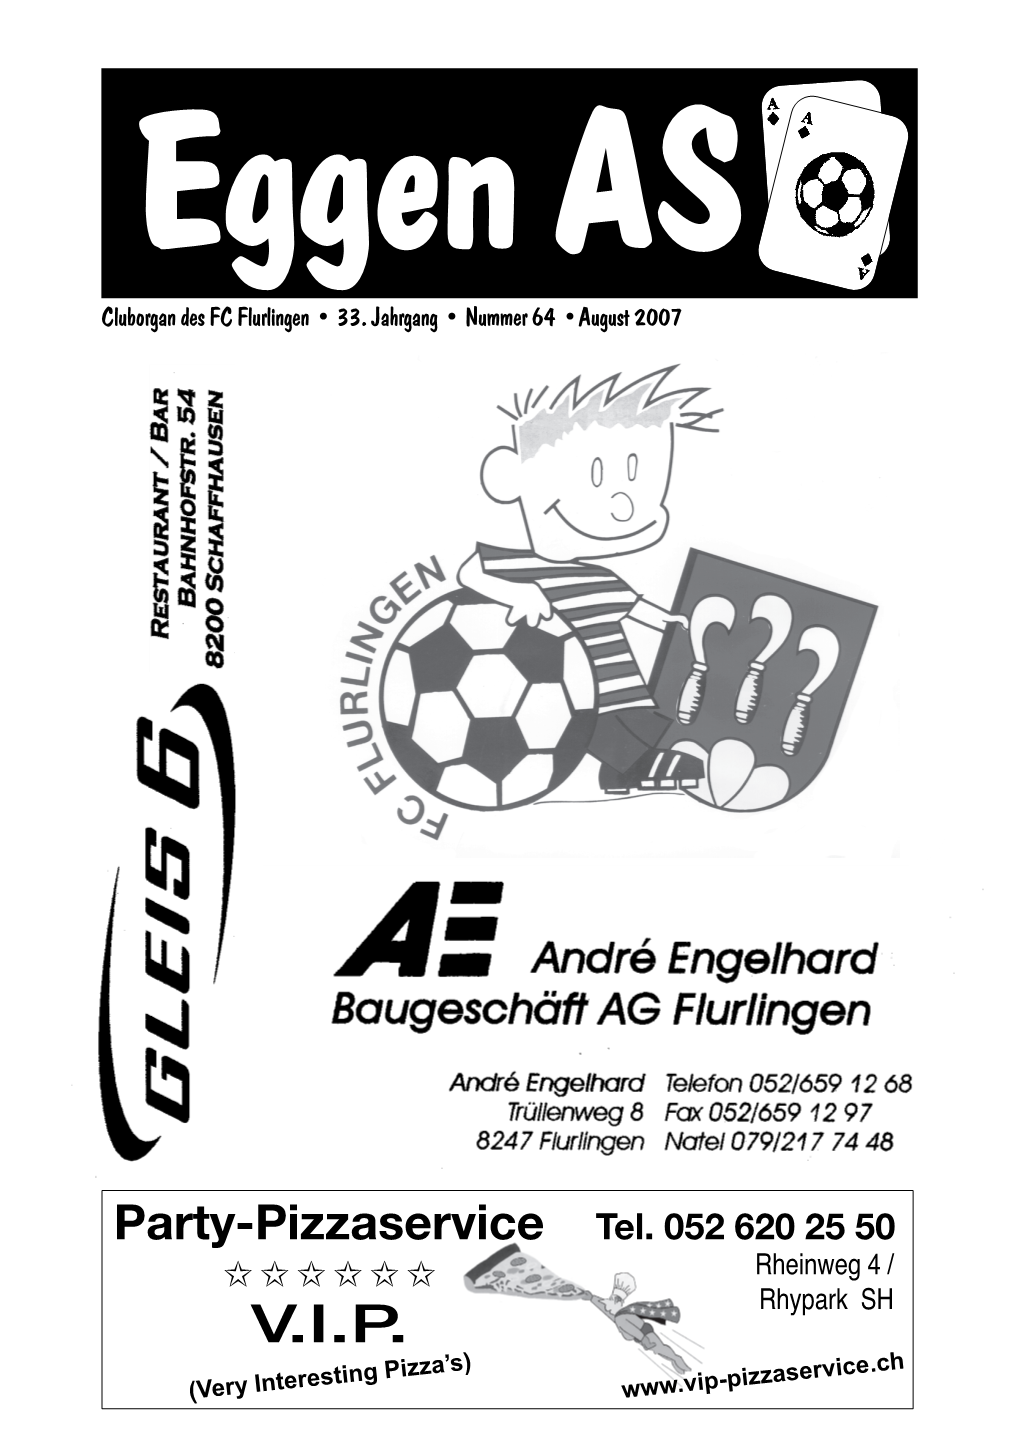 Eggen AS Cluborgan Des FC Flurlingen • 33